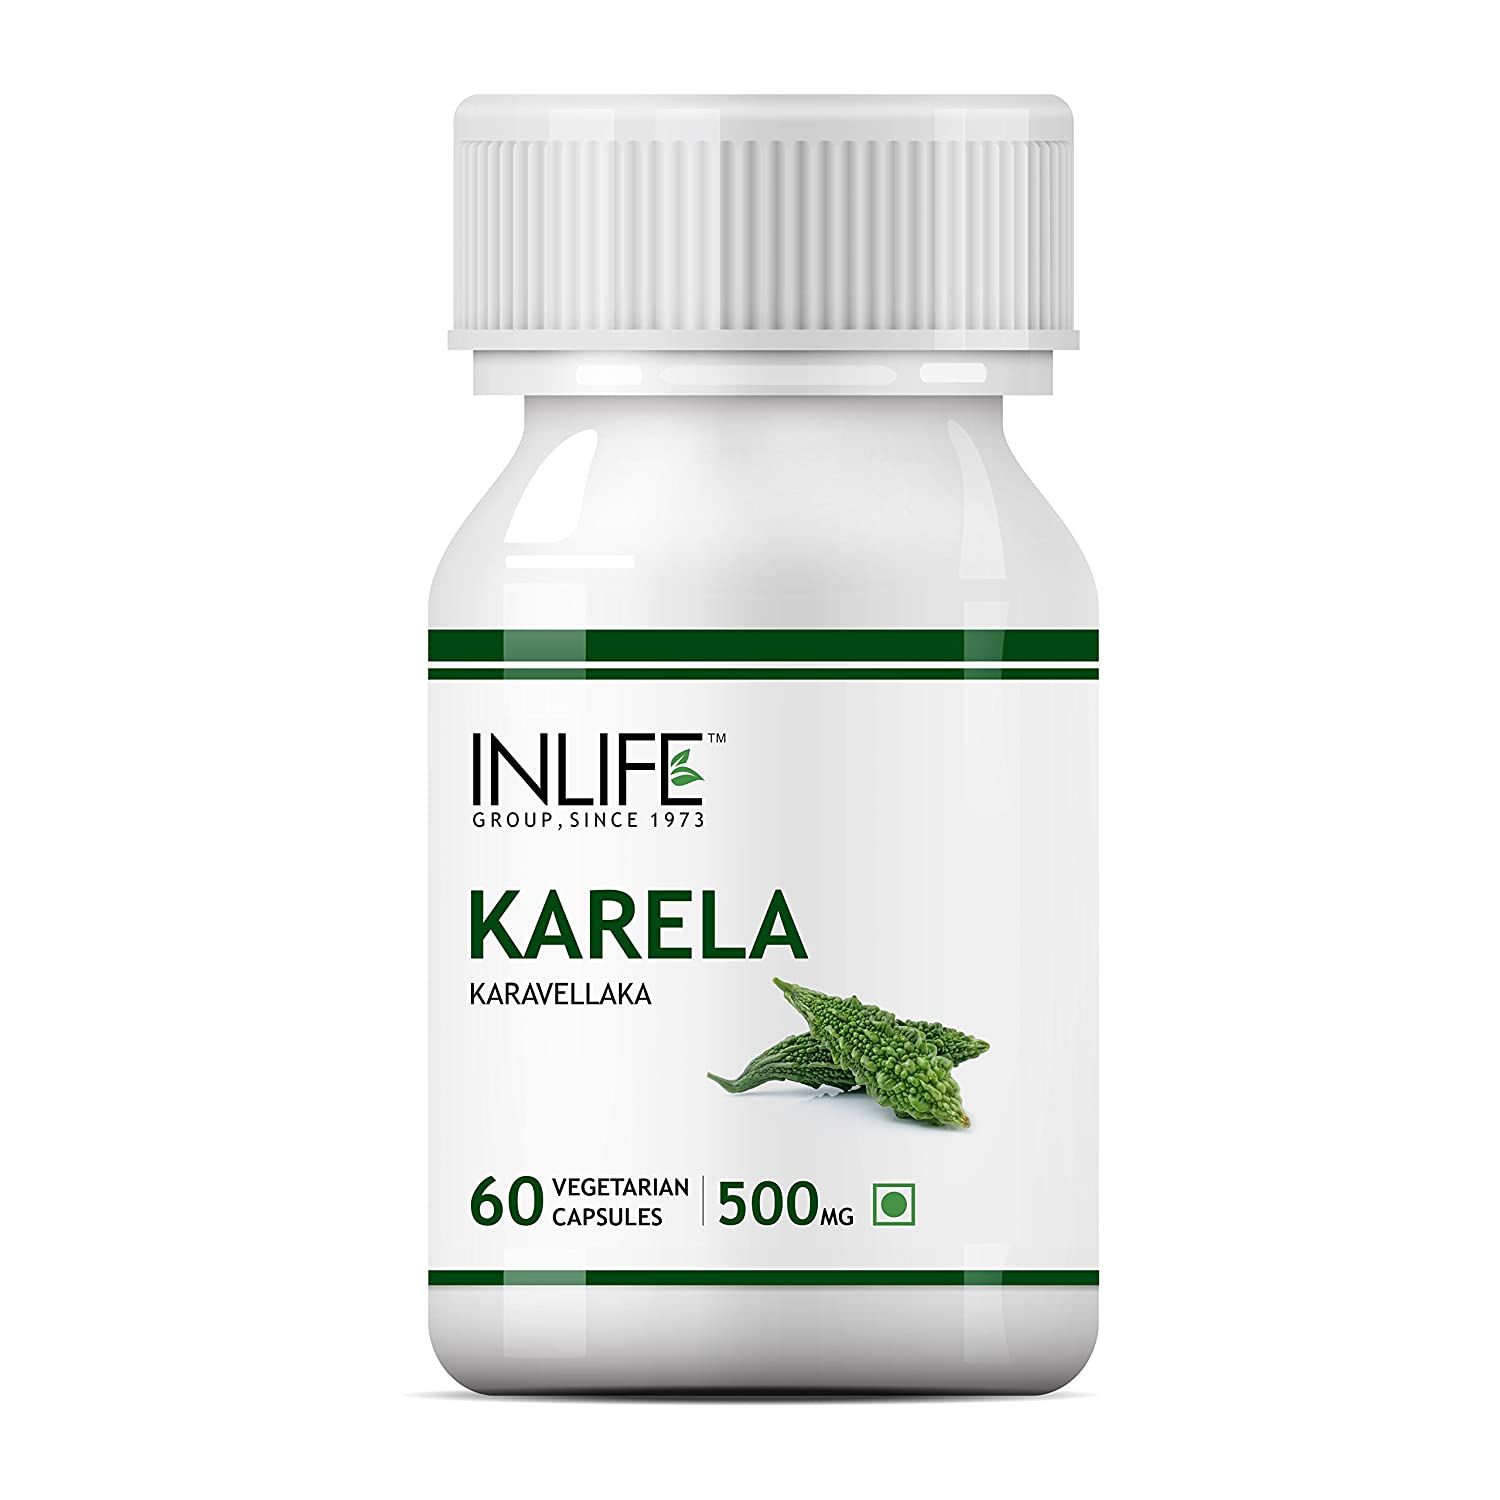 Inlife Karela Extract Capsules Image